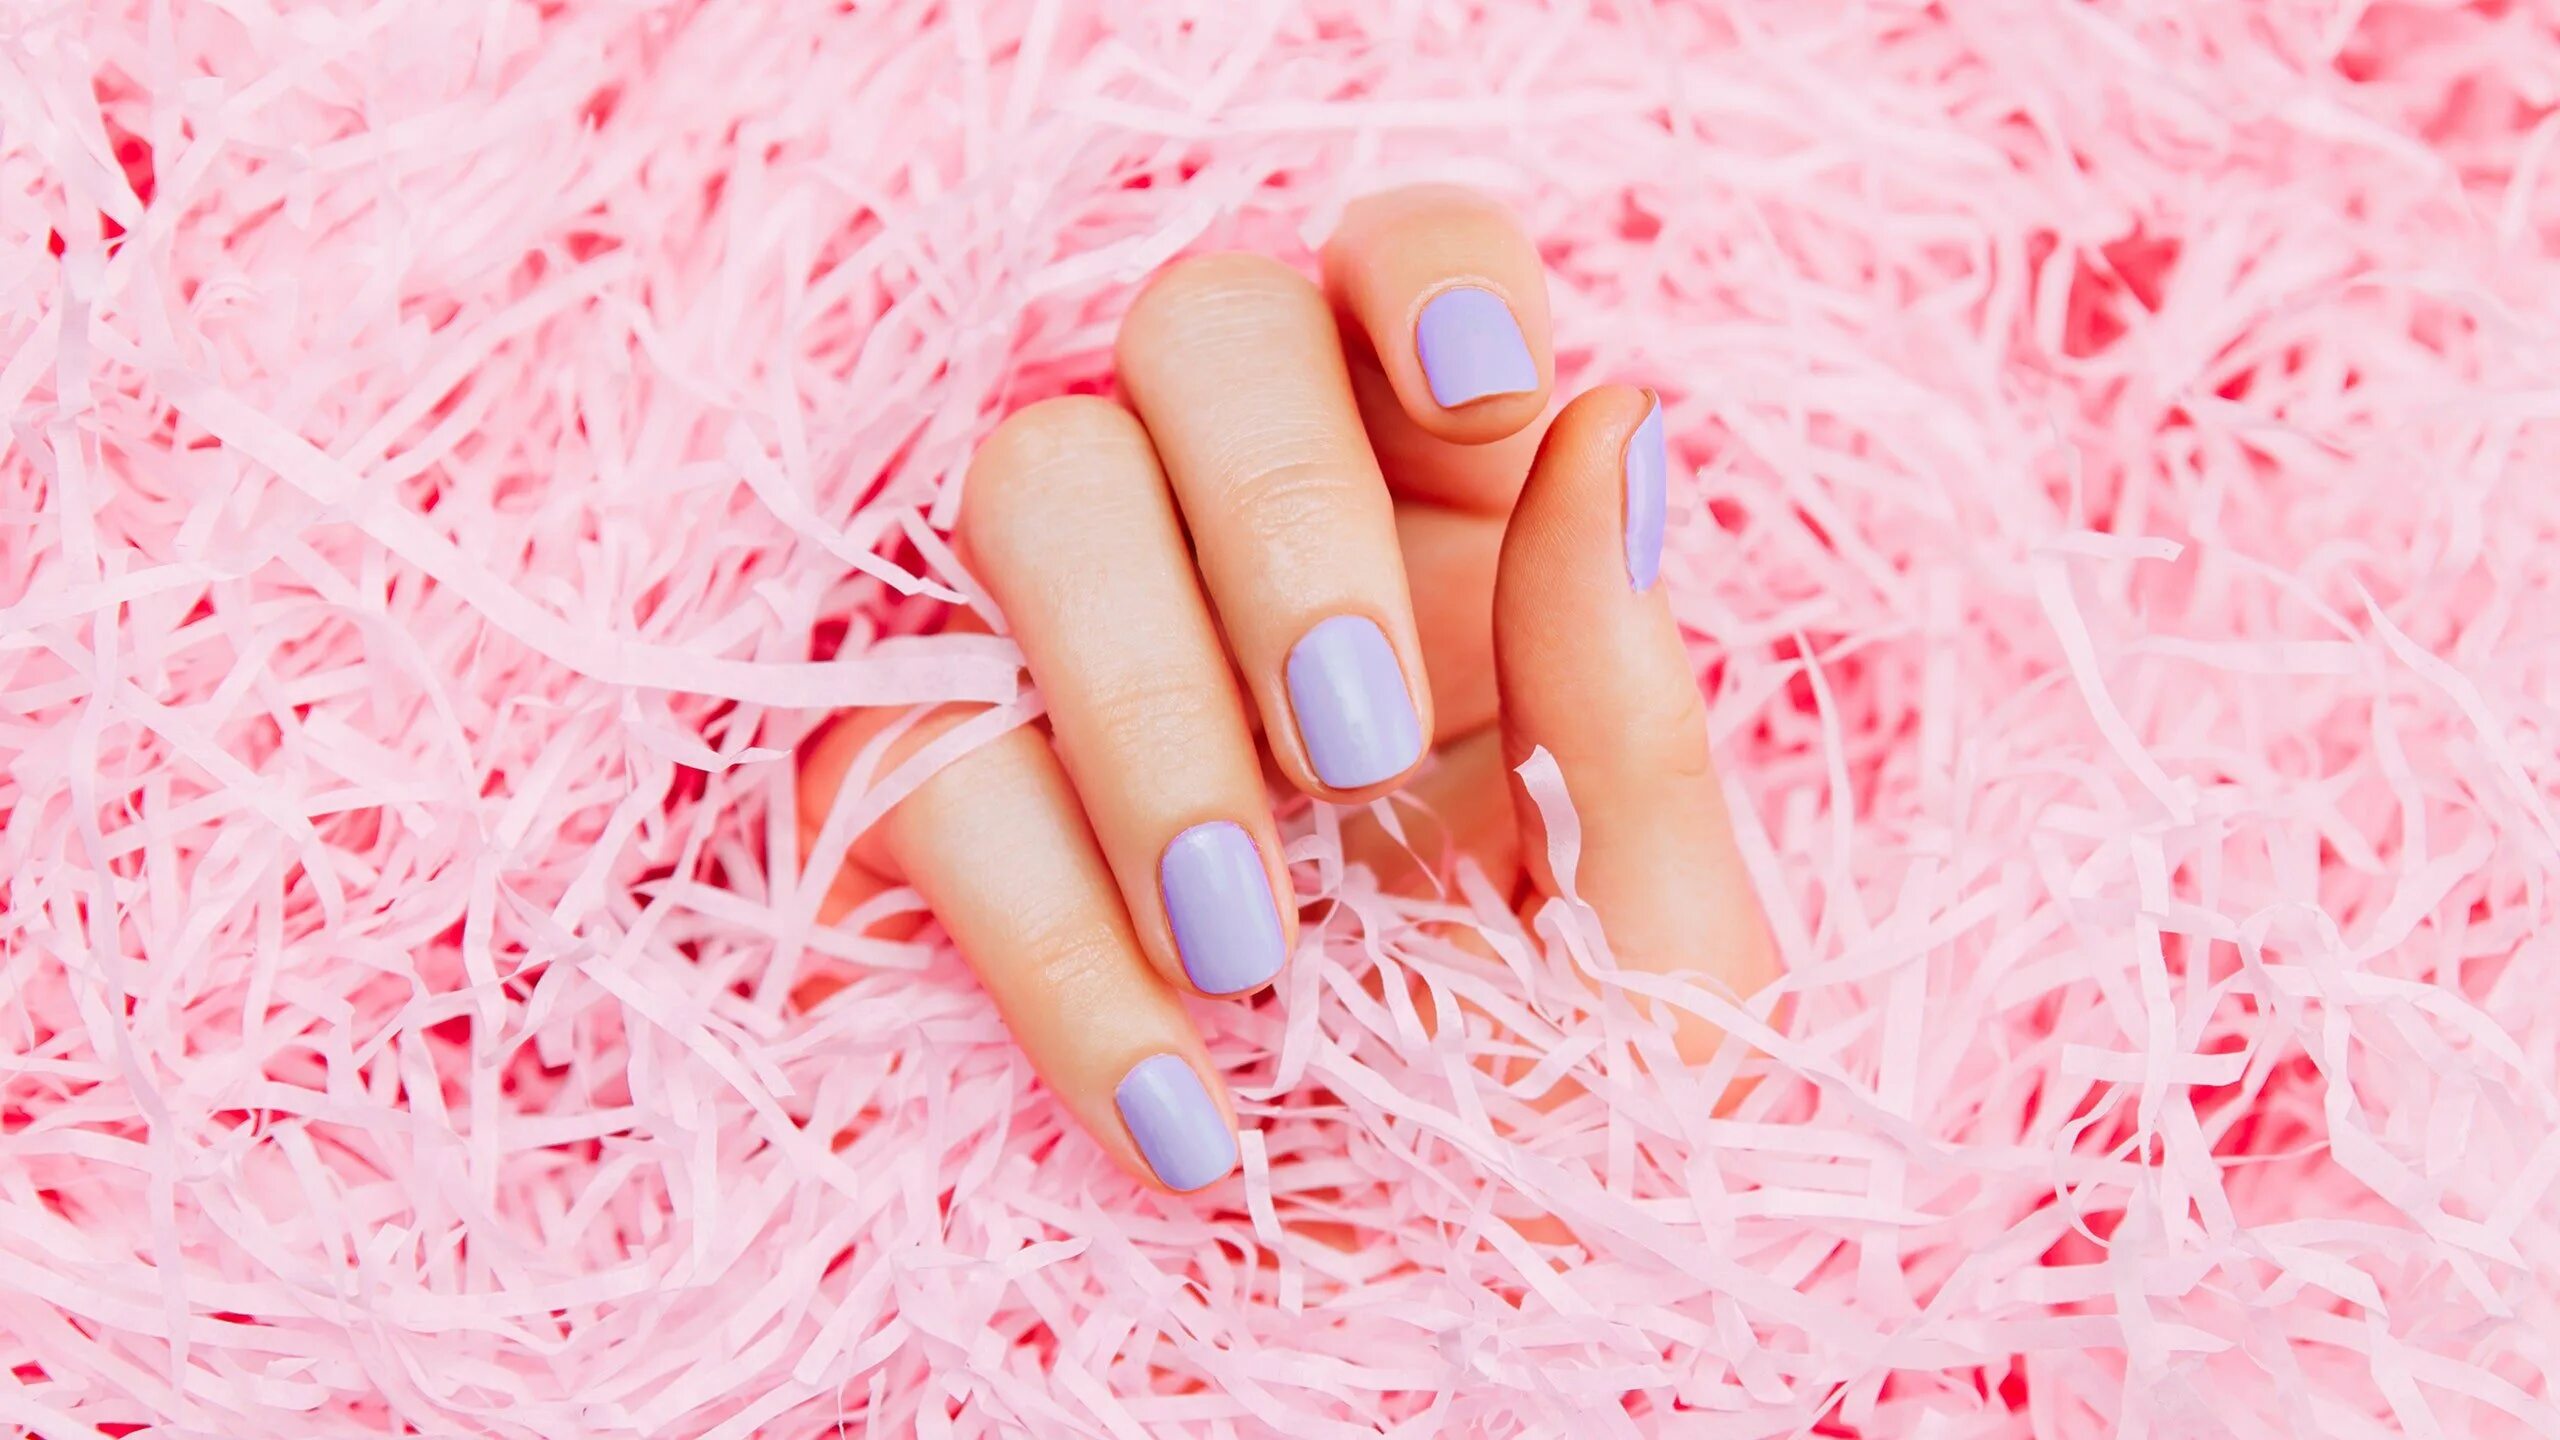 Маникюр обои. Ногти. Красивые ногти. Красивые руки с маникюром. Розовый ногти на руках